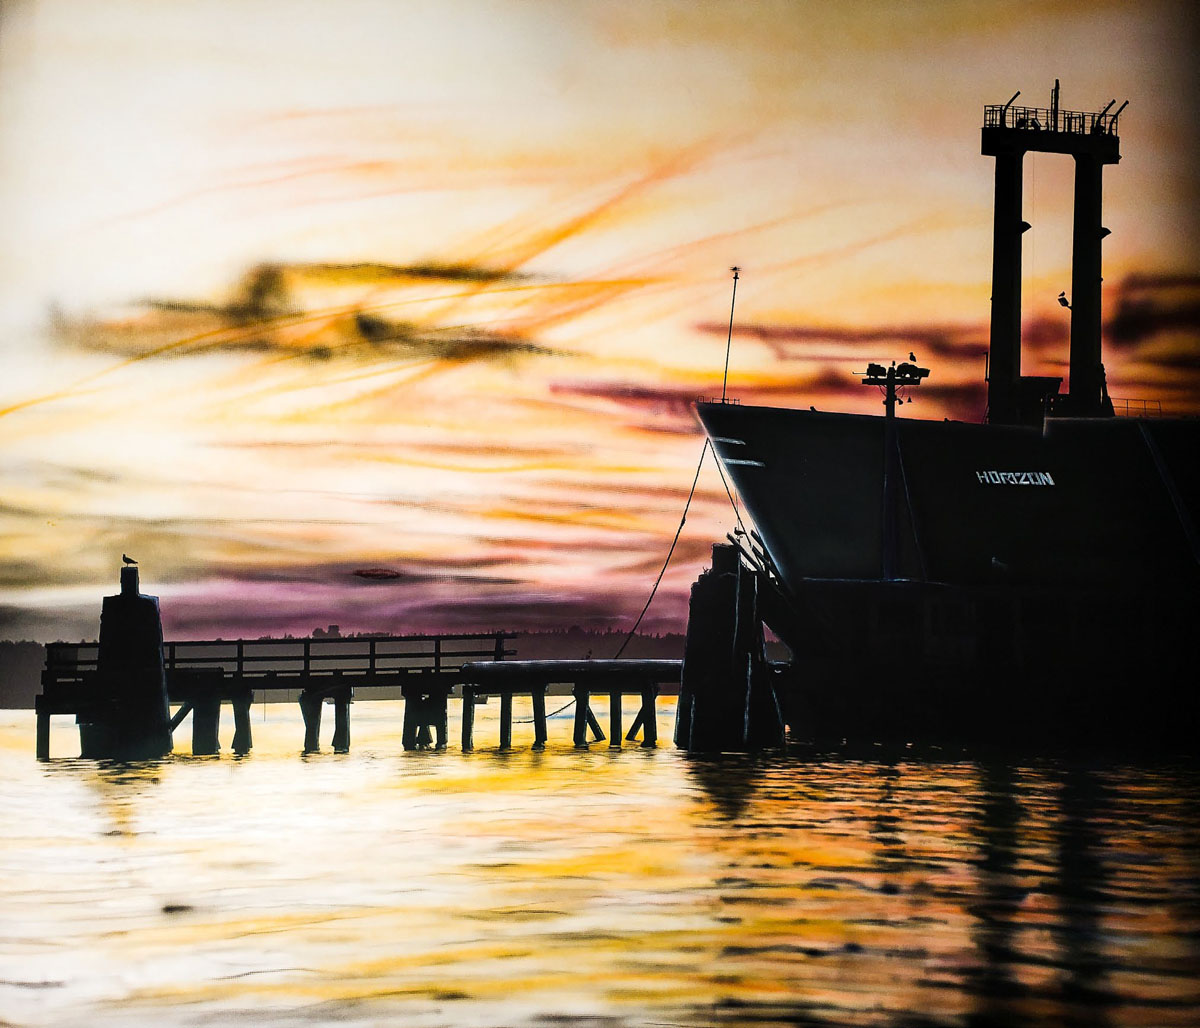 orangey streaked sky, a pier, silhouette of a working boat